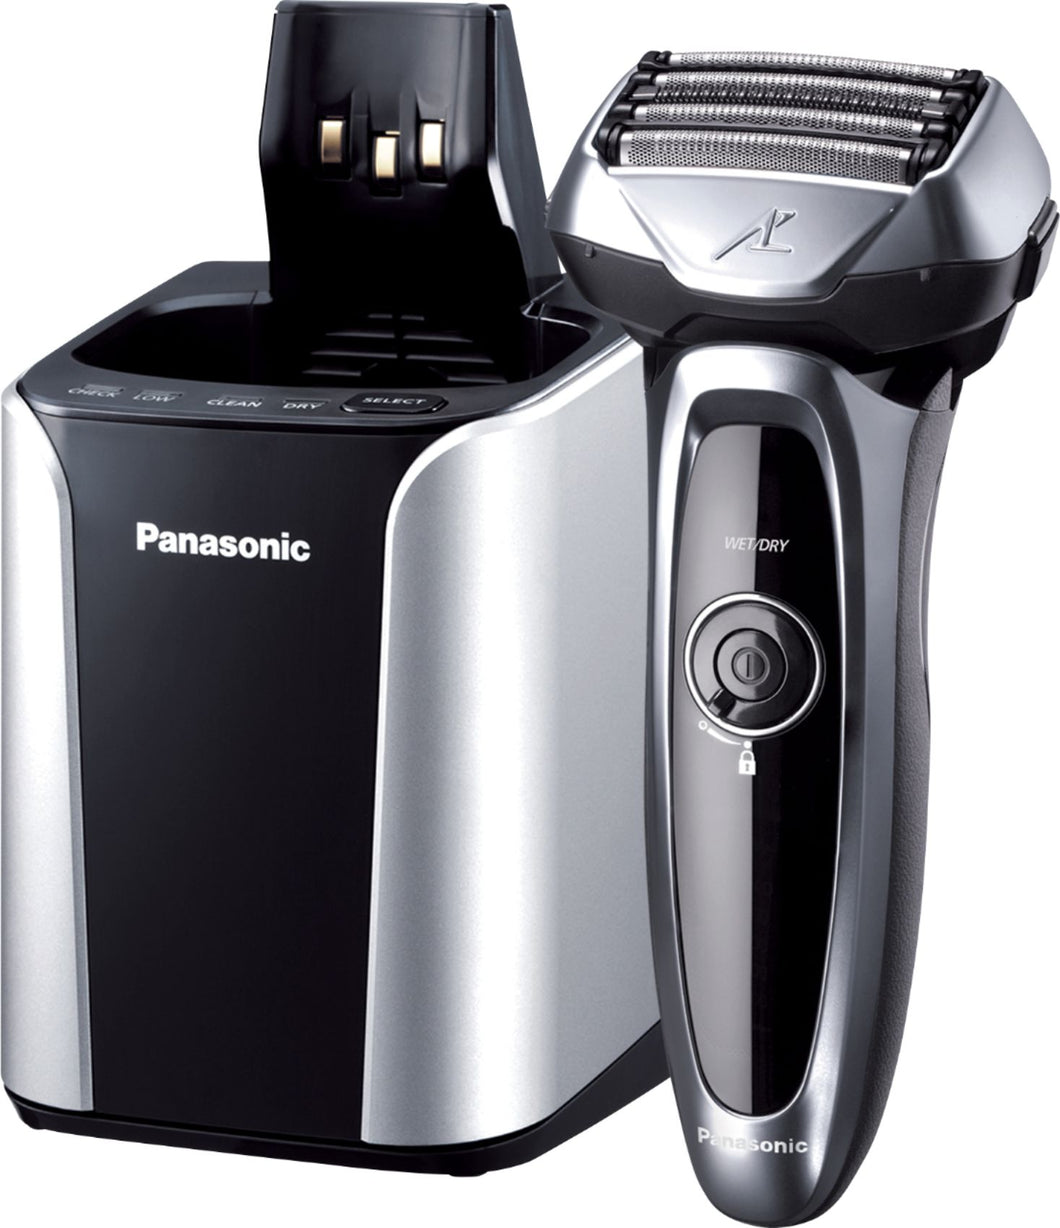 Panasonic Arc5 Wet/Dry Auto Cleaning Men's Electric Razor Shaver ES-LV95-S